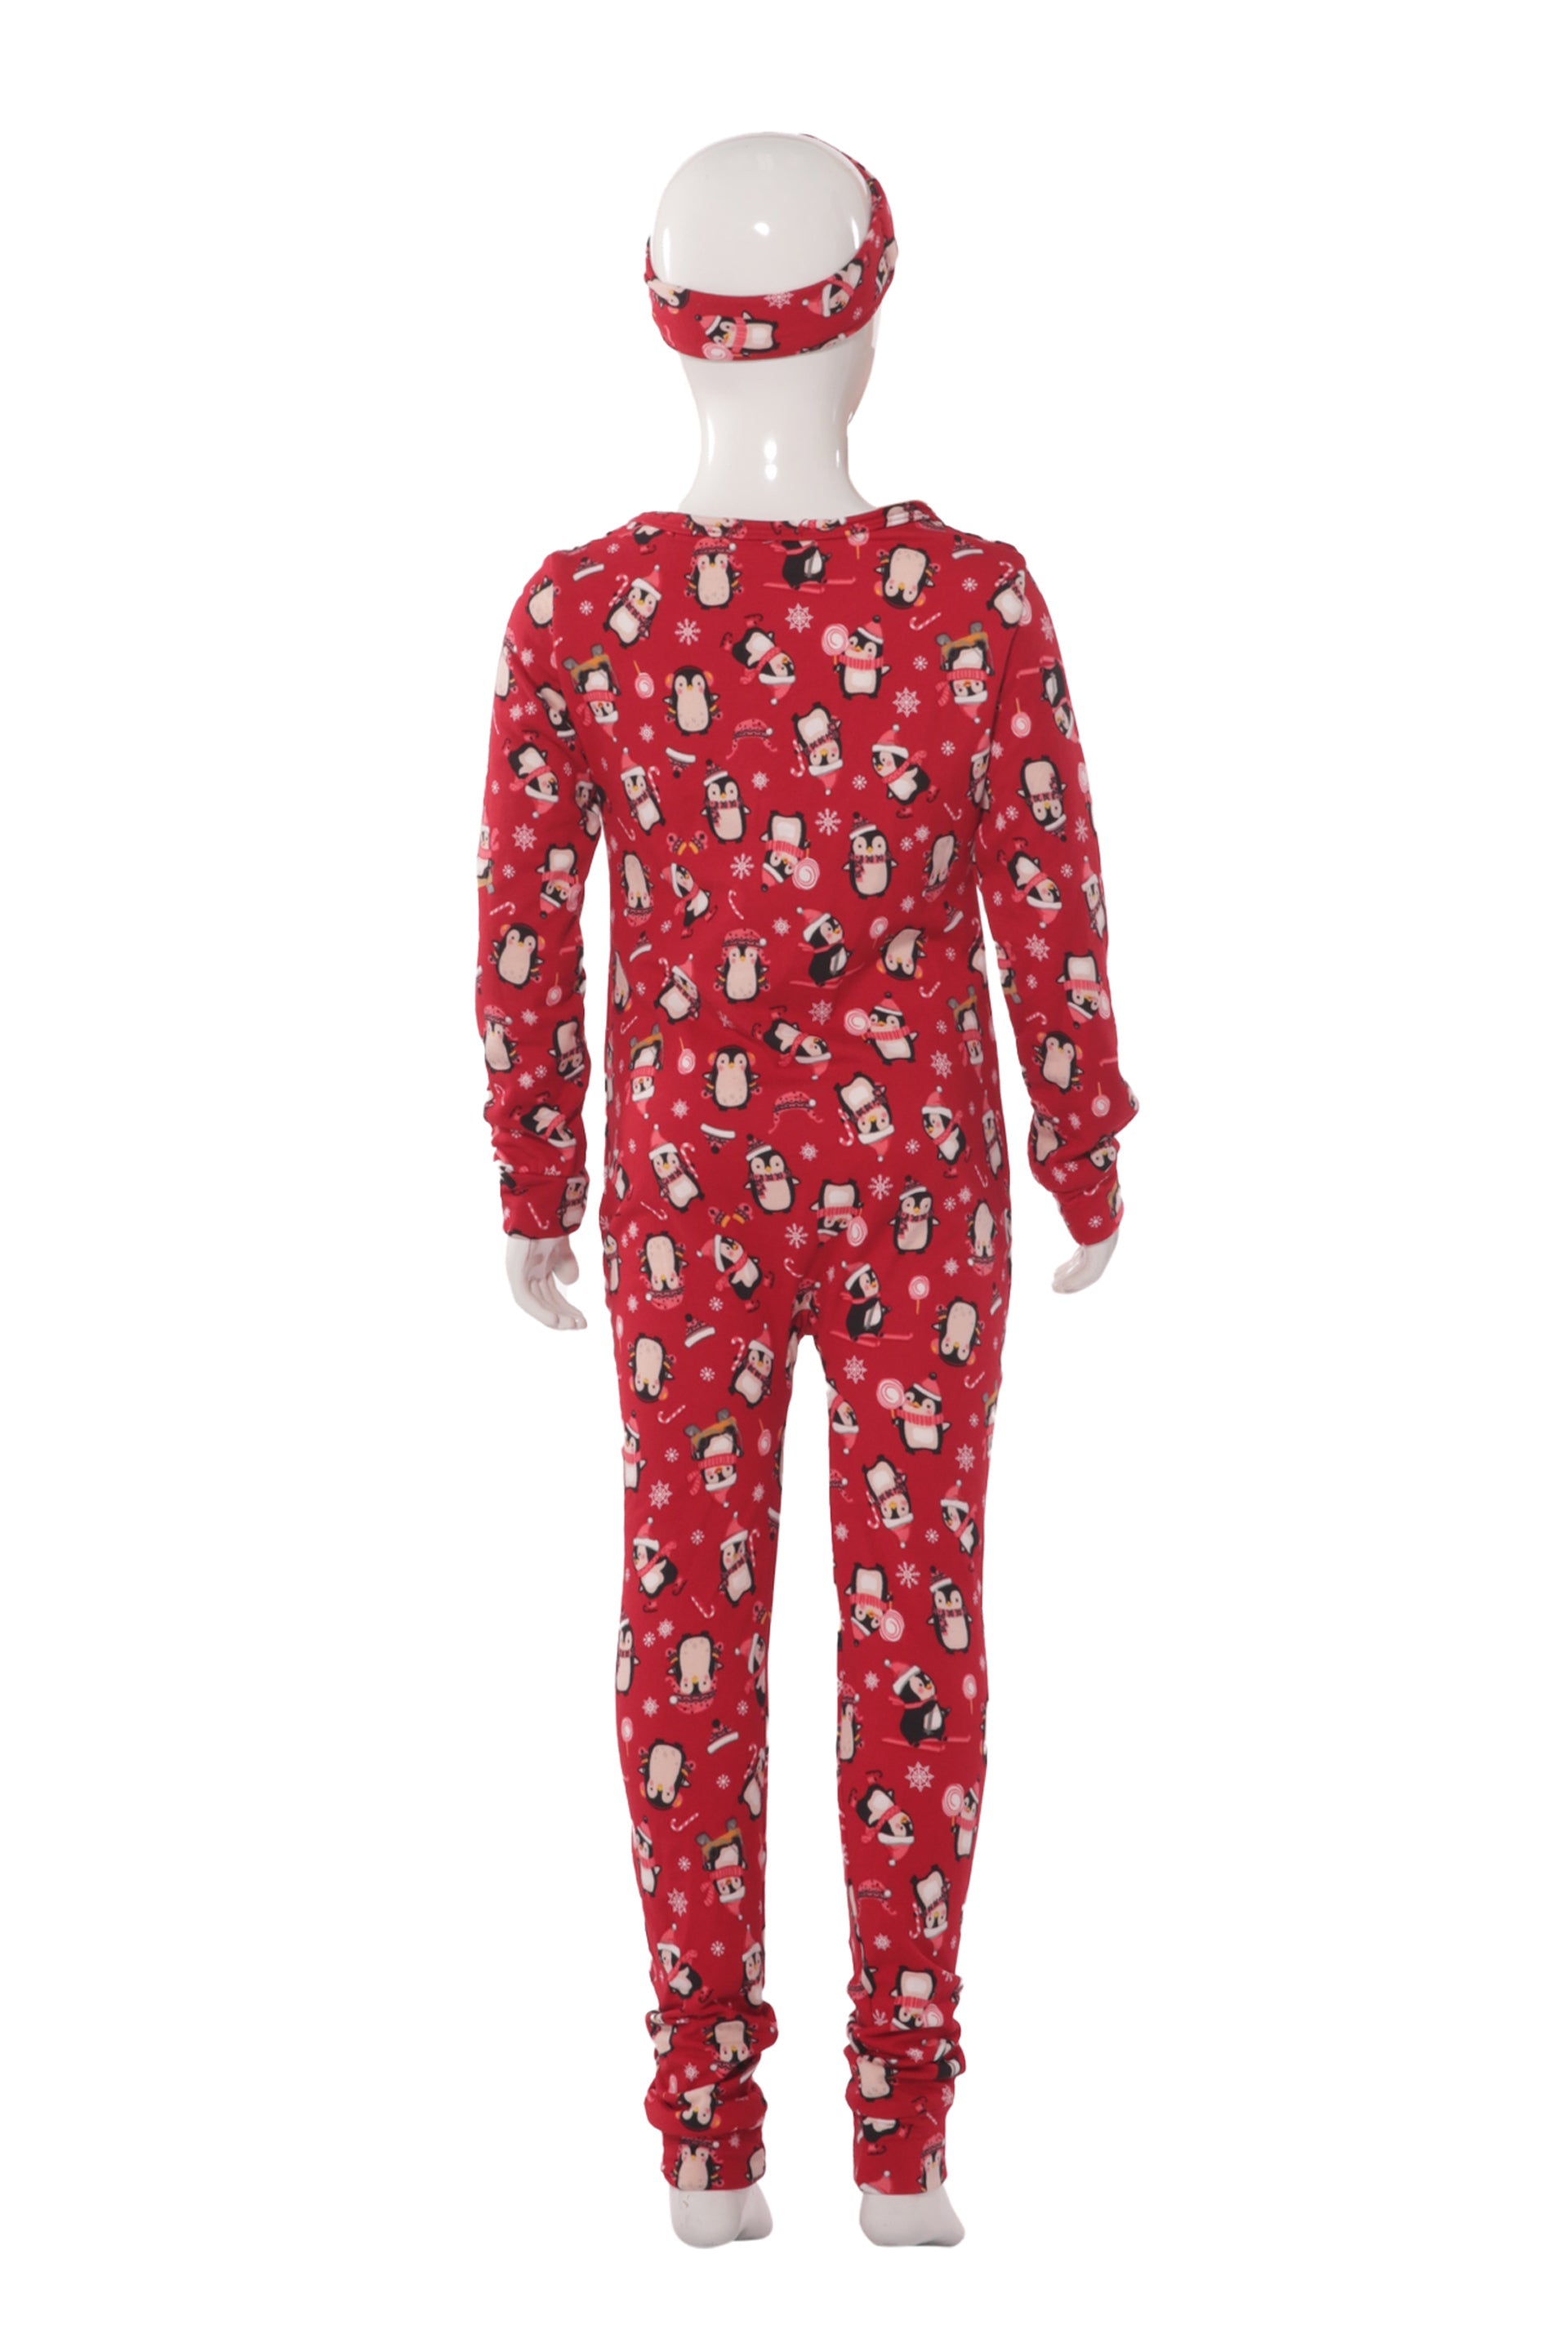 Wholesale Kids Christmas Print Fleece Lined Jumpsuit Onesie Pajamas - Red Penguins